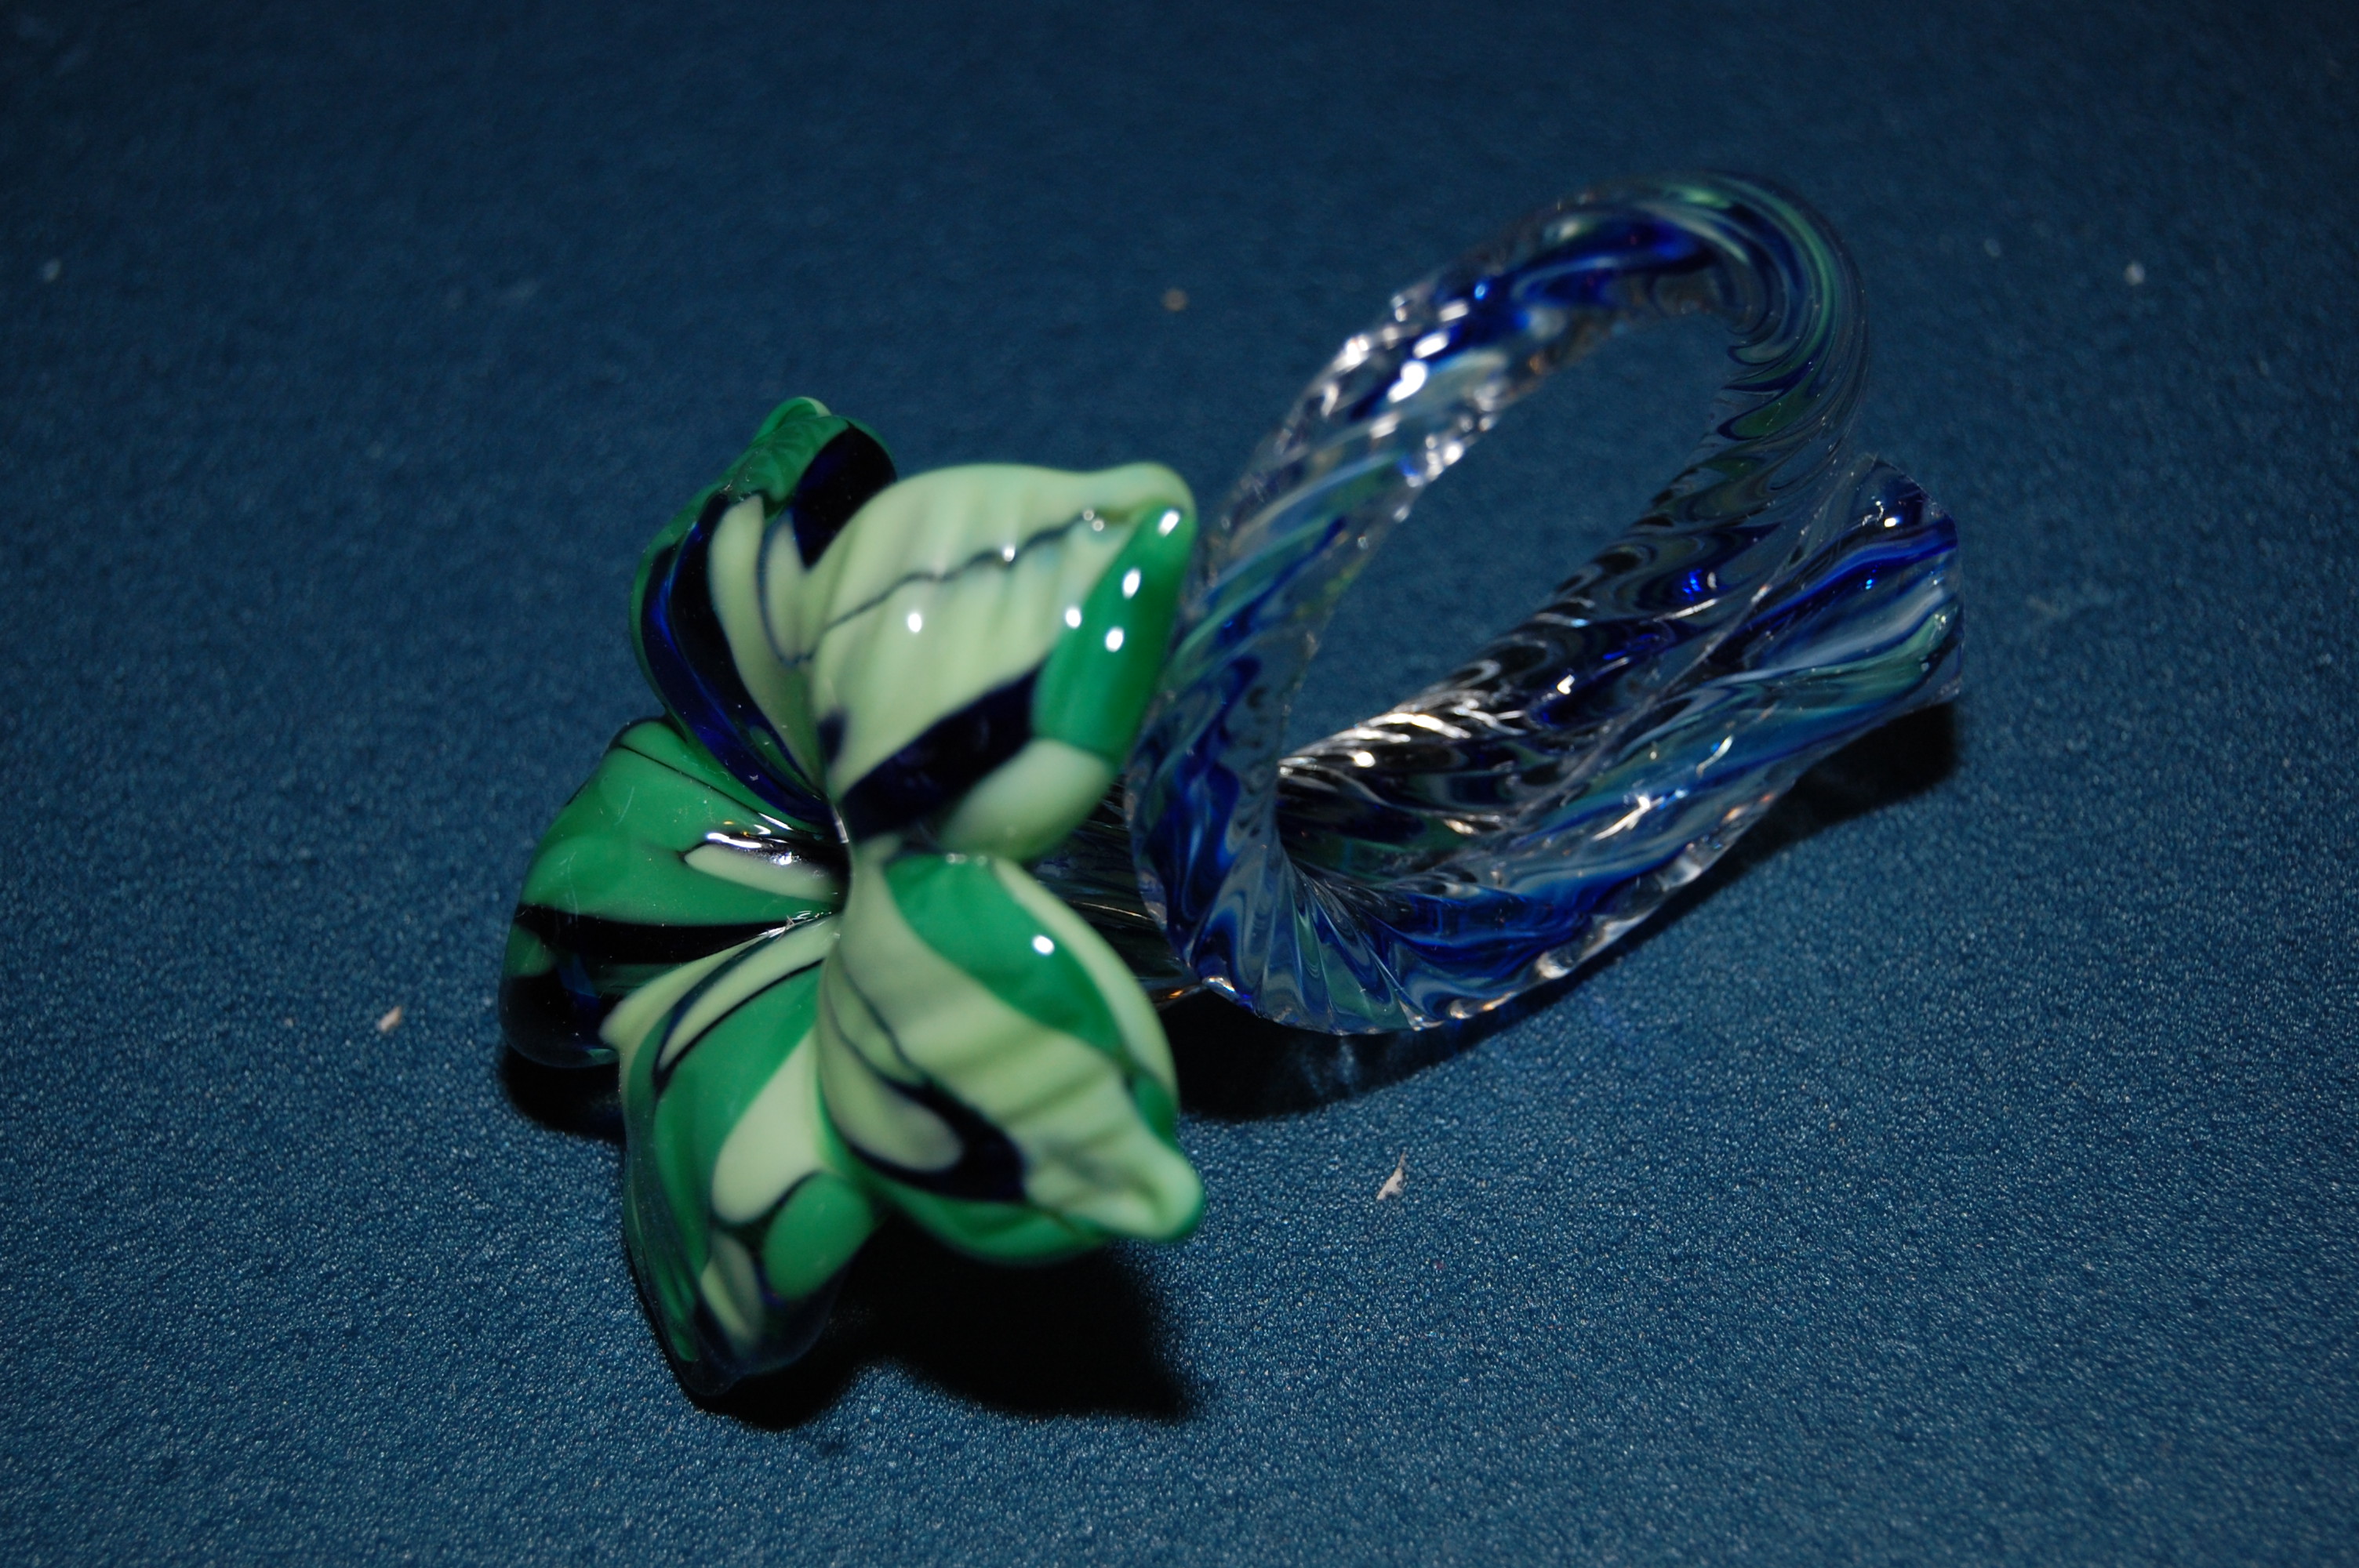 servetring in bloemvorm, gemilleerd groene kleur